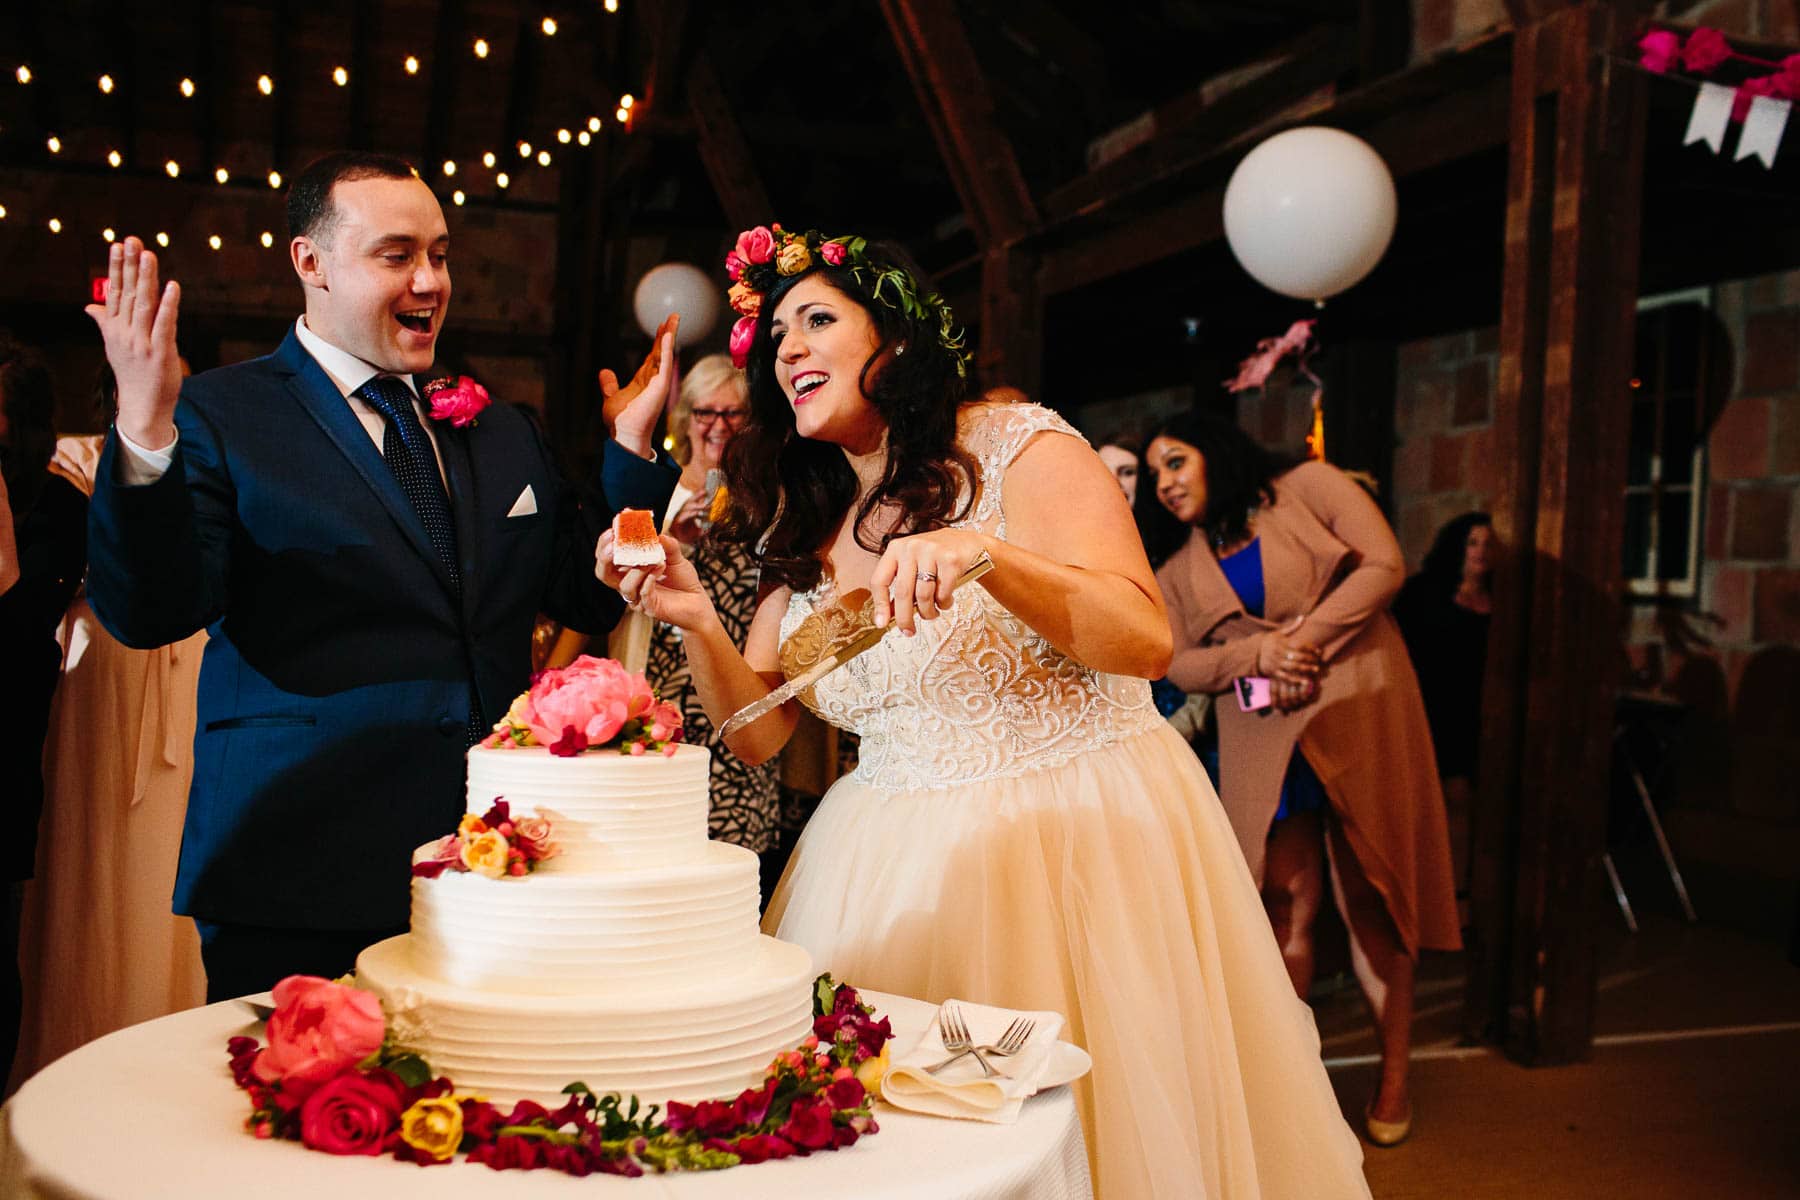 Christie and Josh's Crane Estate Barn wedding reception in Ipswich, MA | Kelly Benvenuto Photography | Boston Wedding Photographer